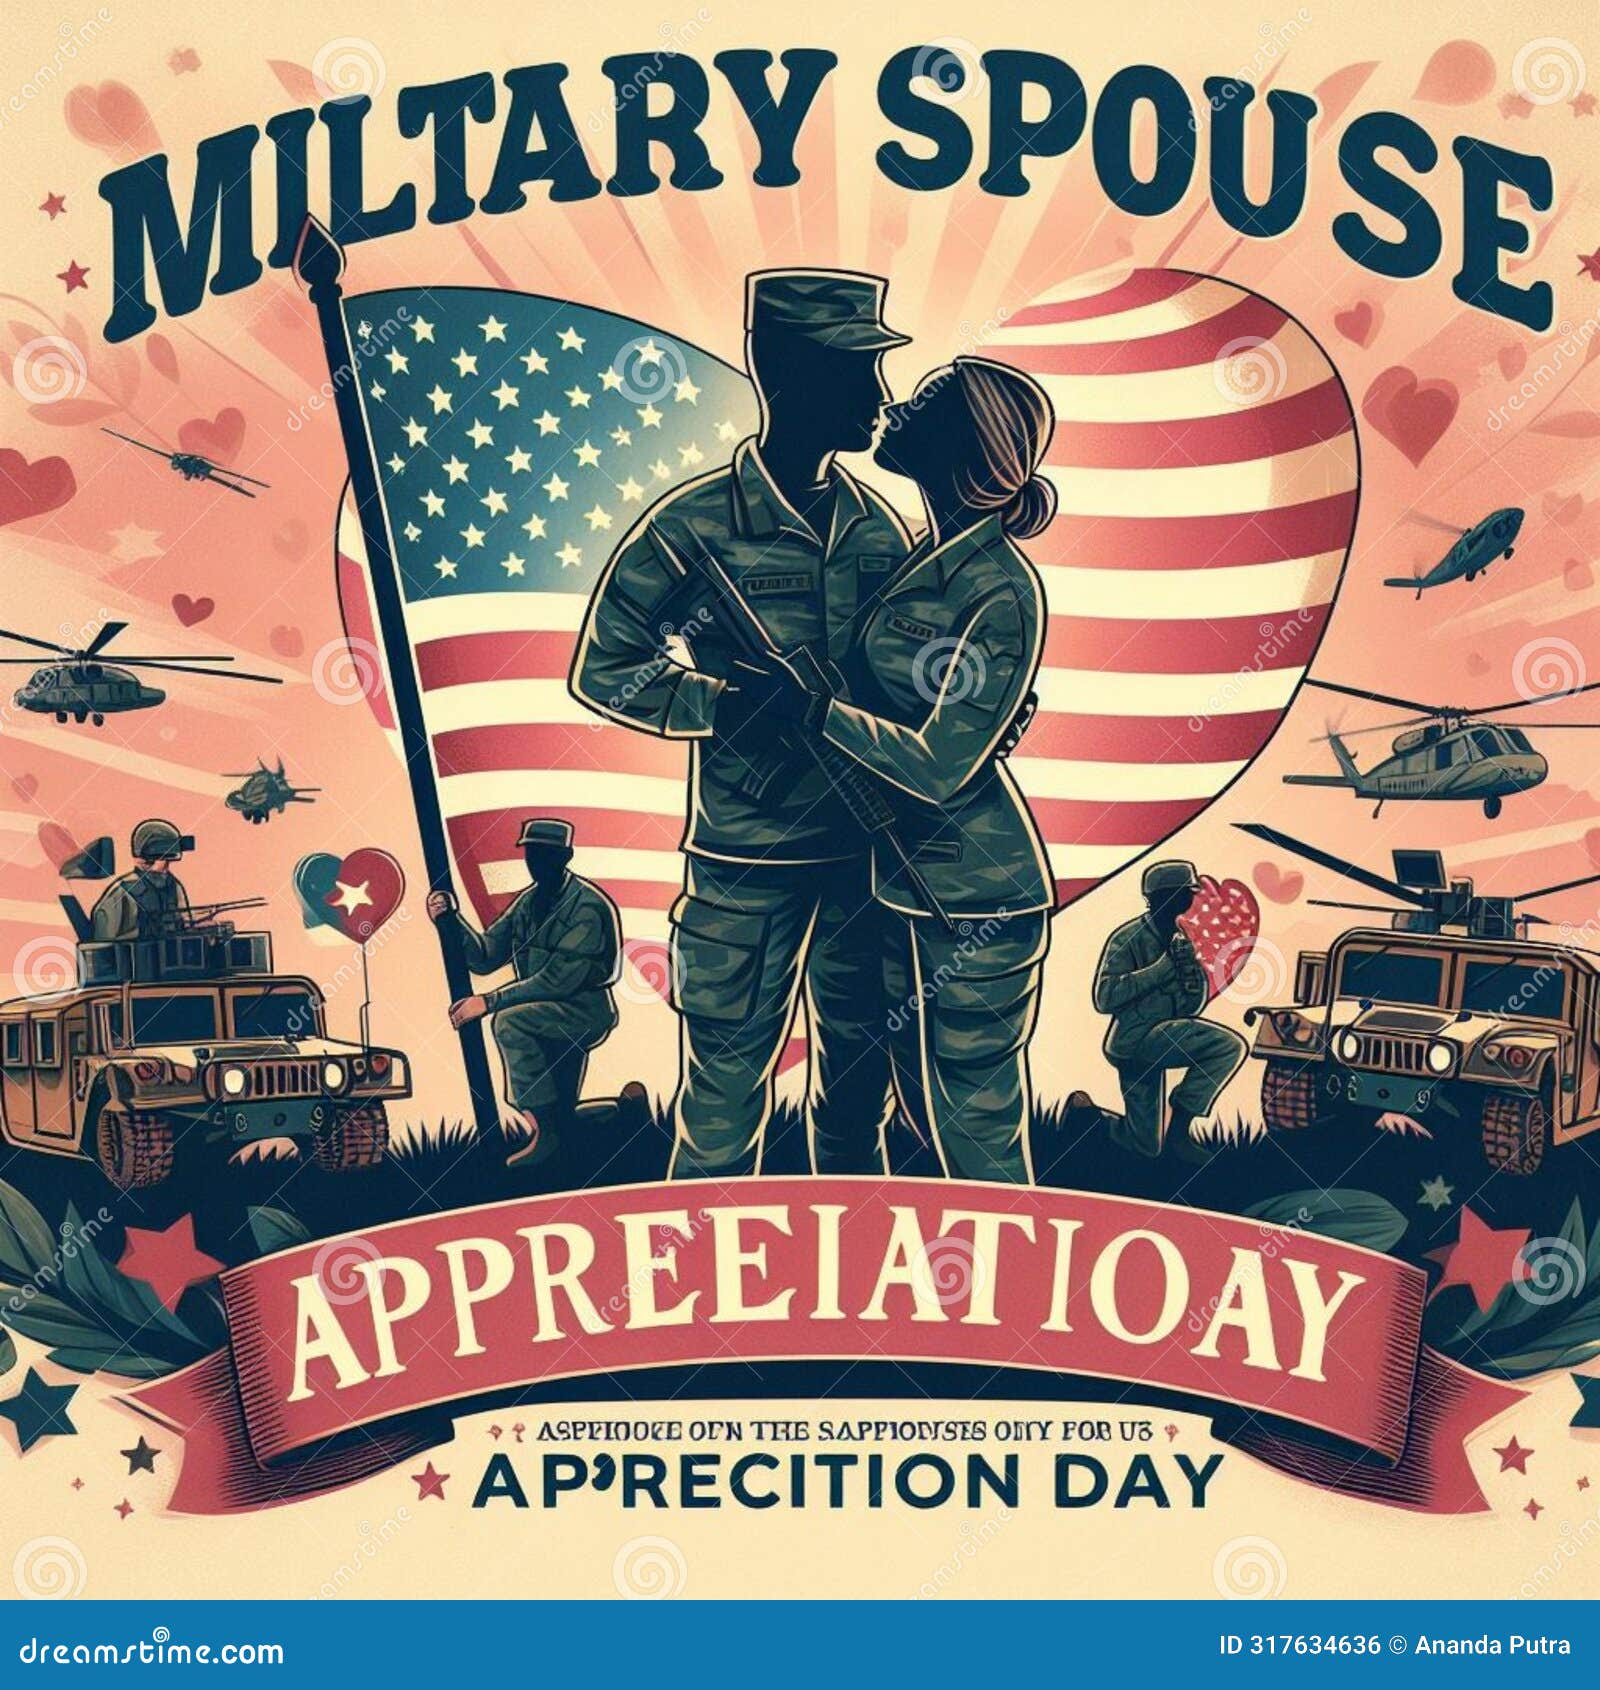 commemorate military spouse appreciation day